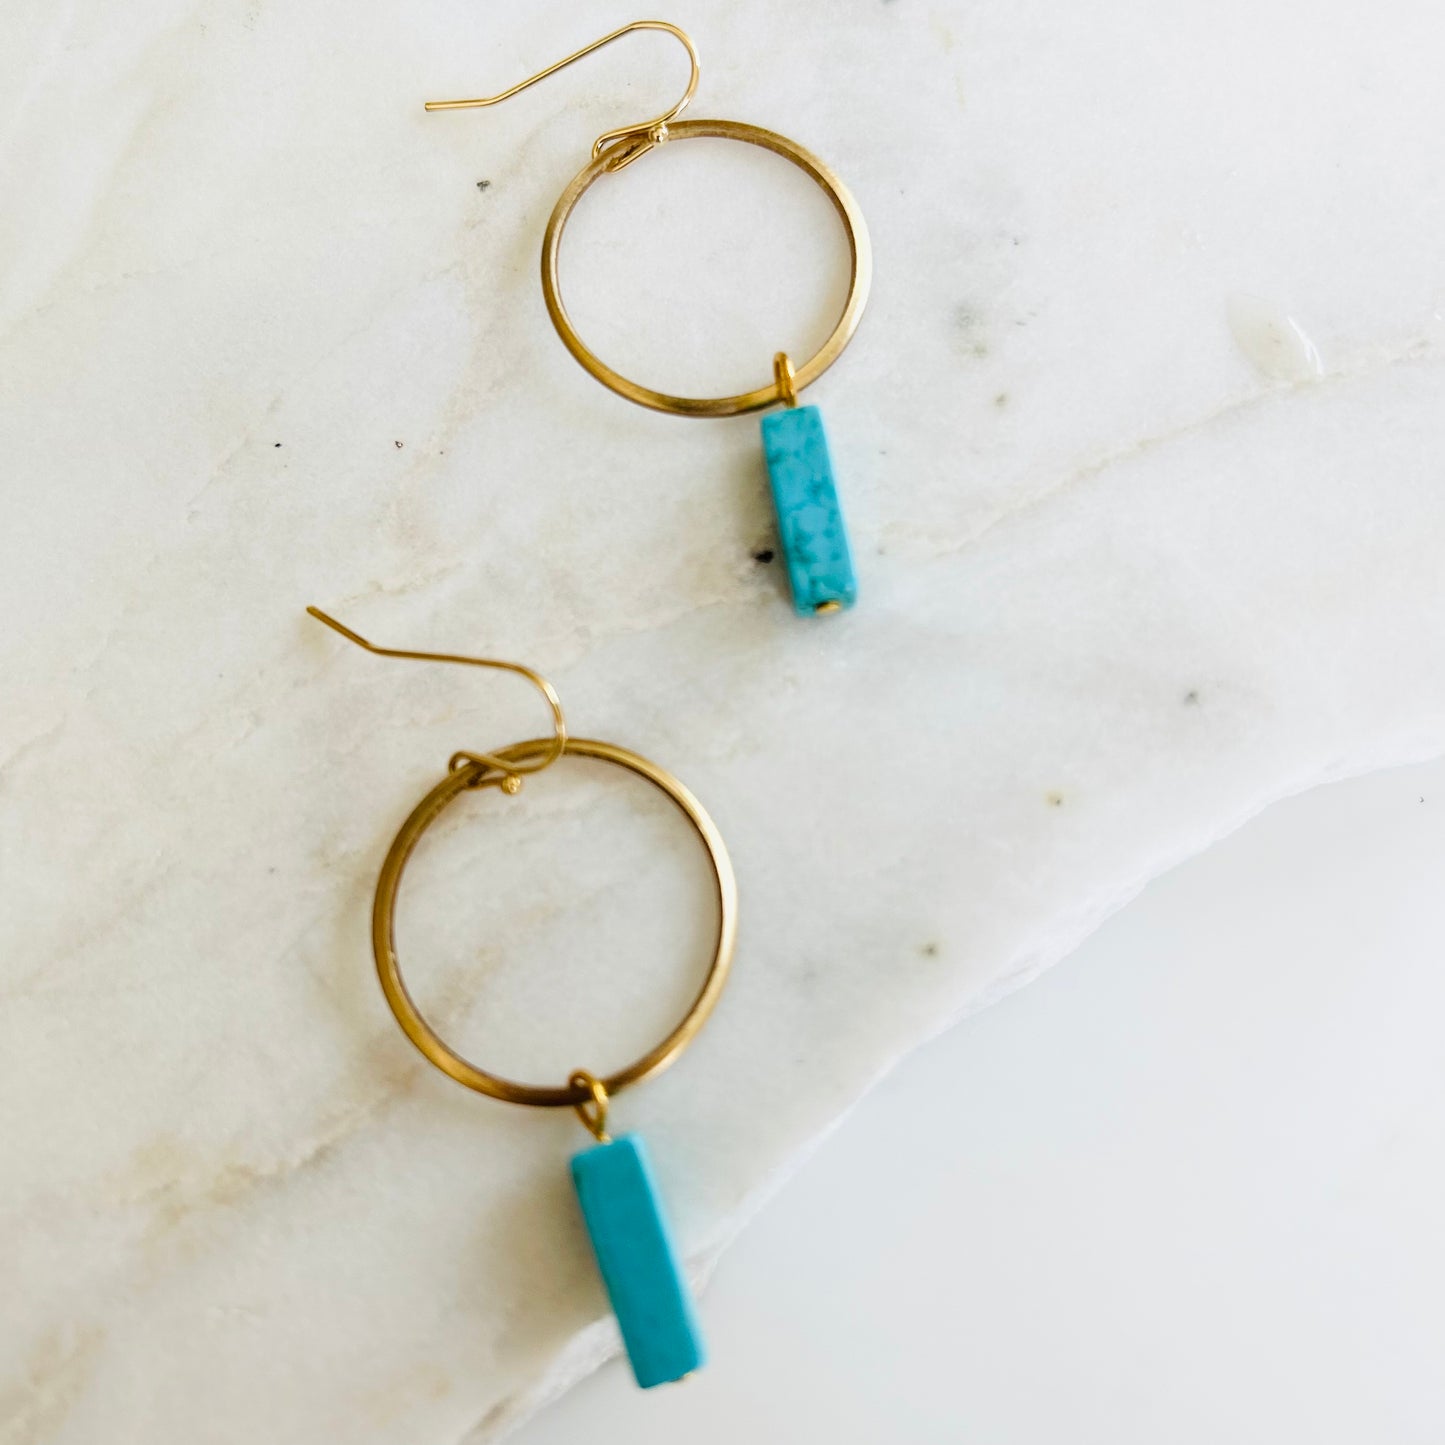 Turquoise Lolli earrings